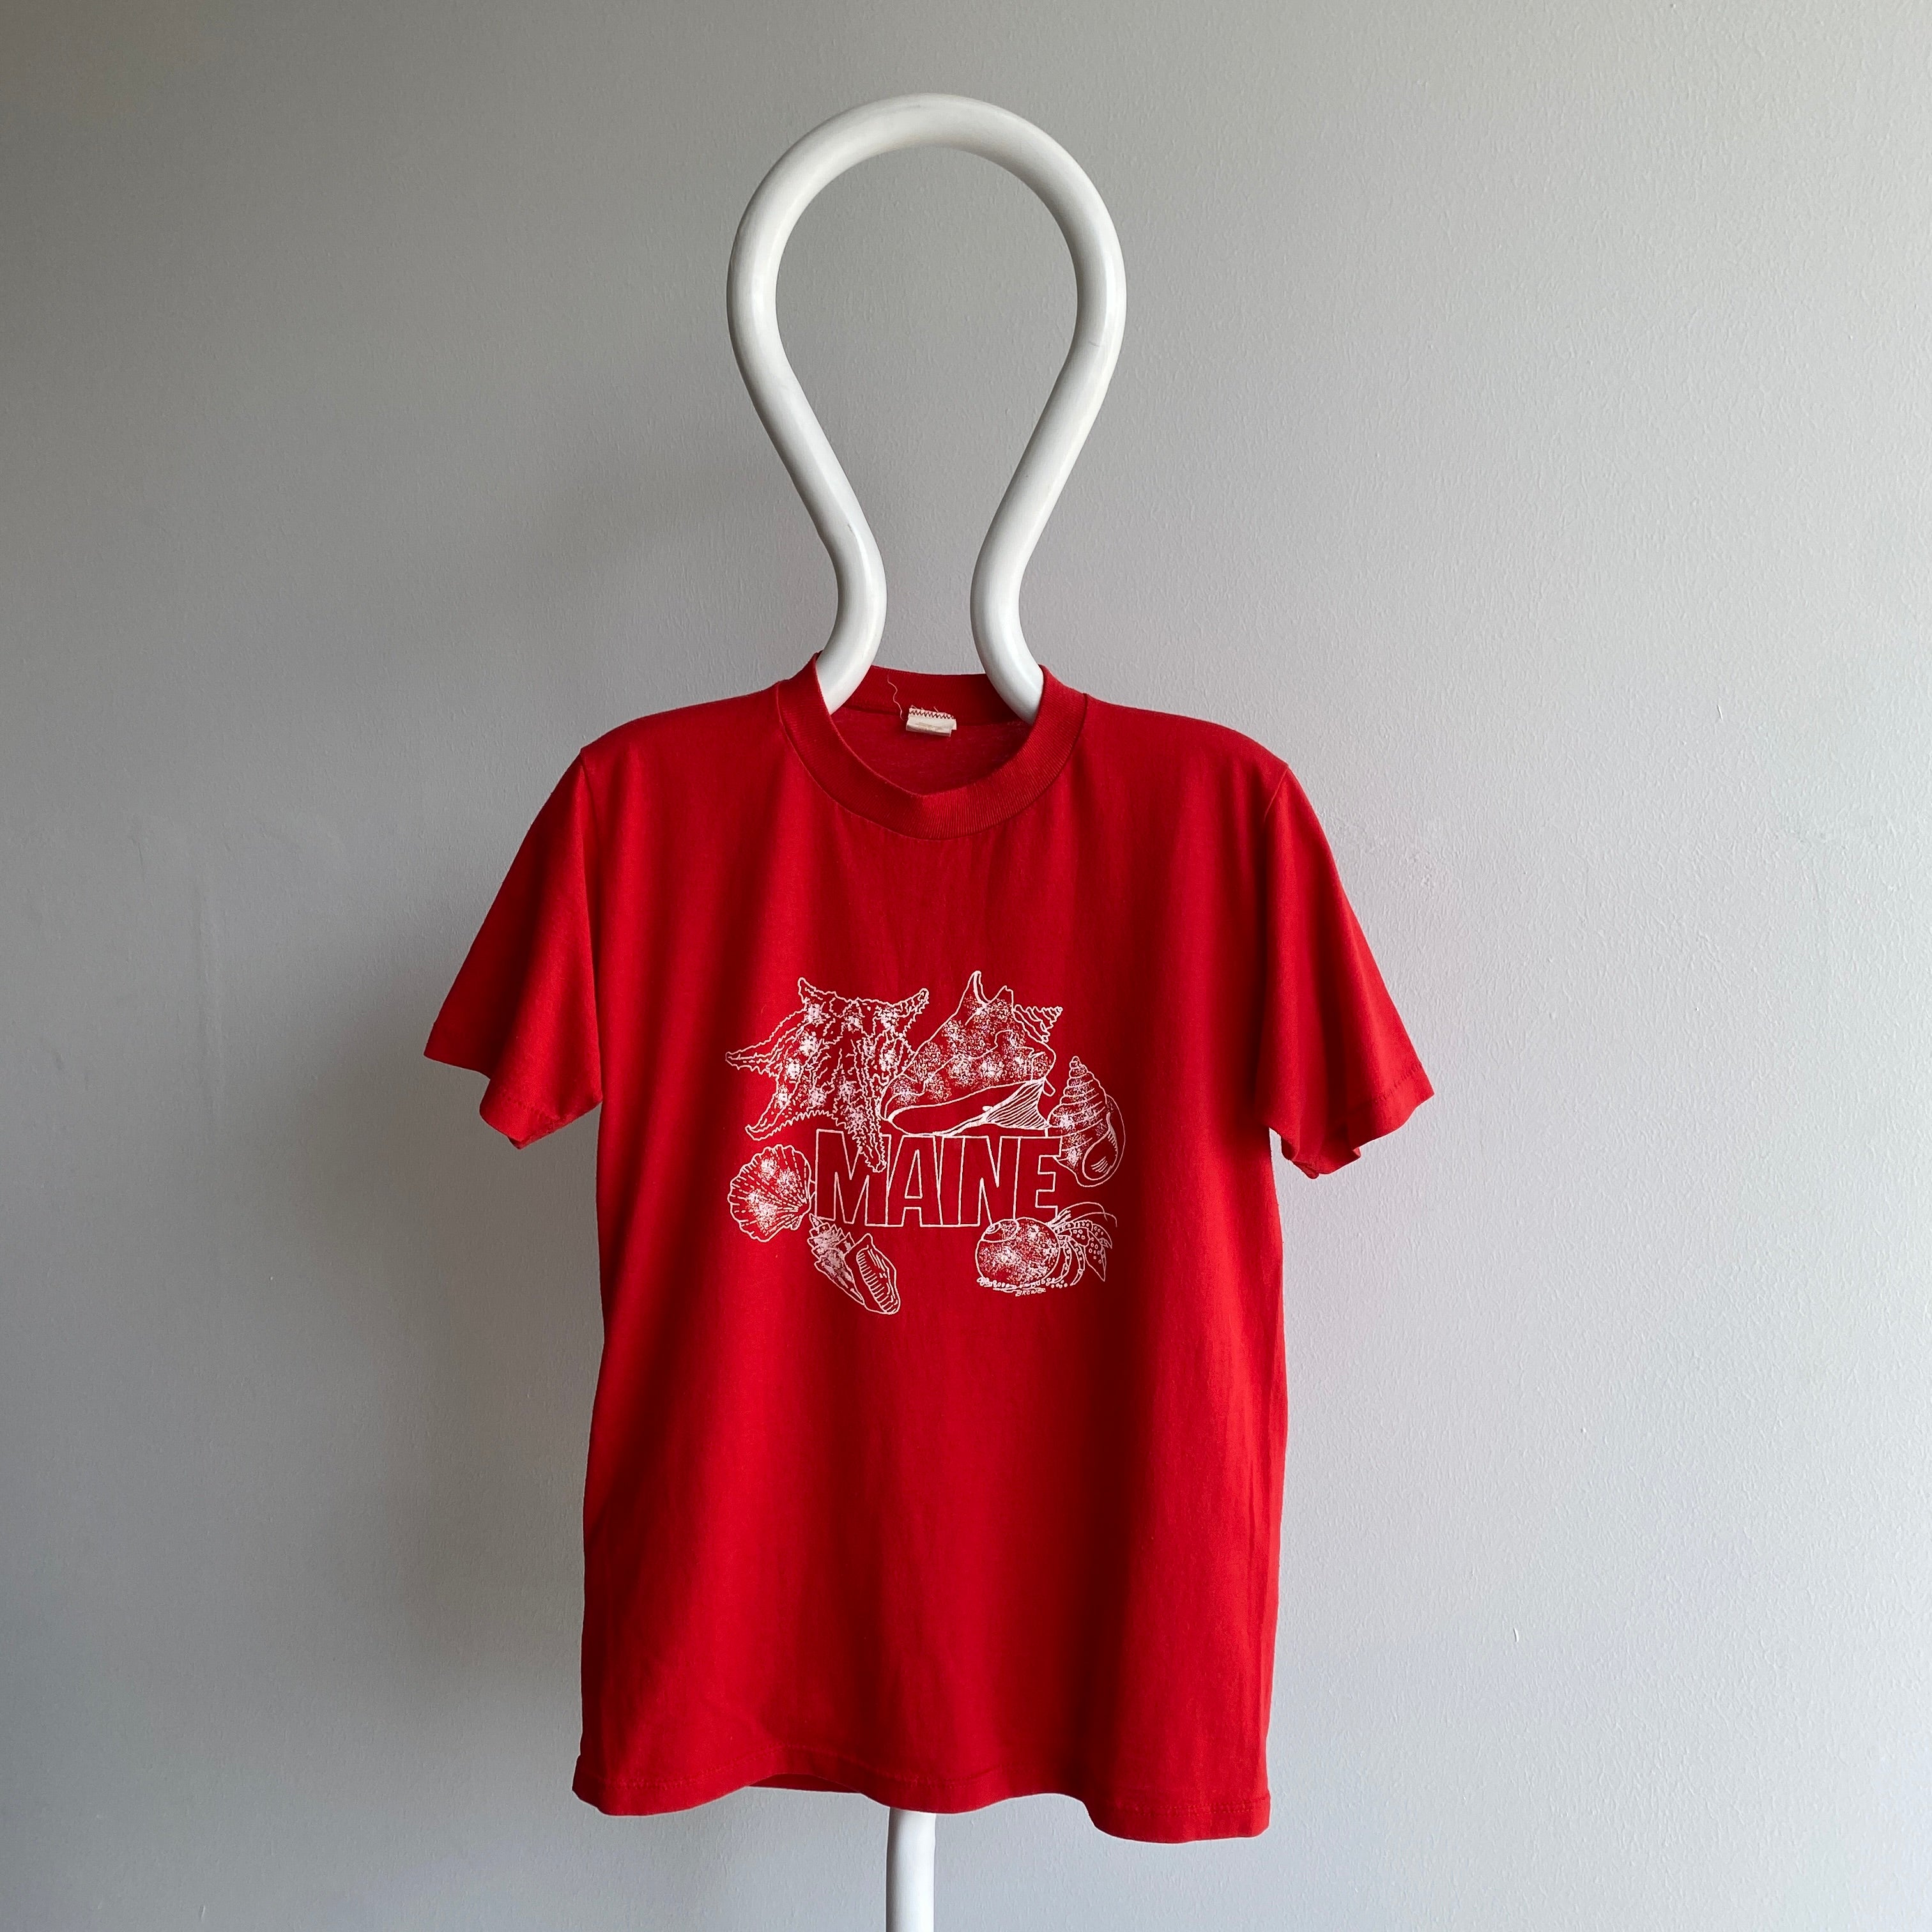 1988 Maine Tourist T-Shirt